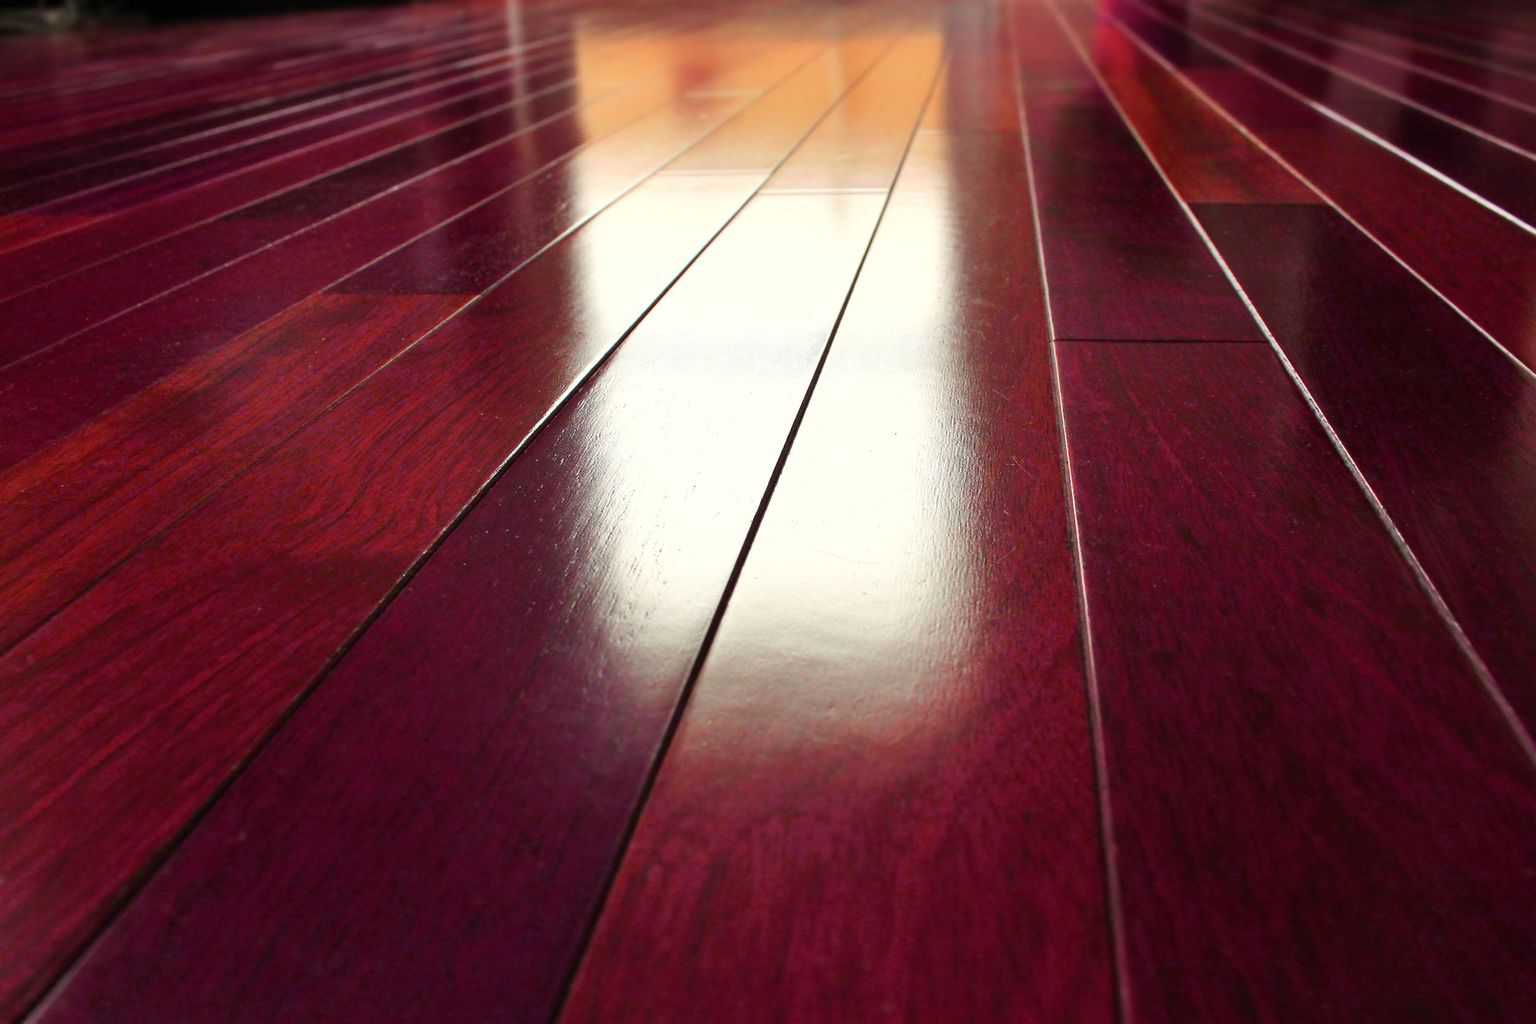 Brazilian hardwood flooring